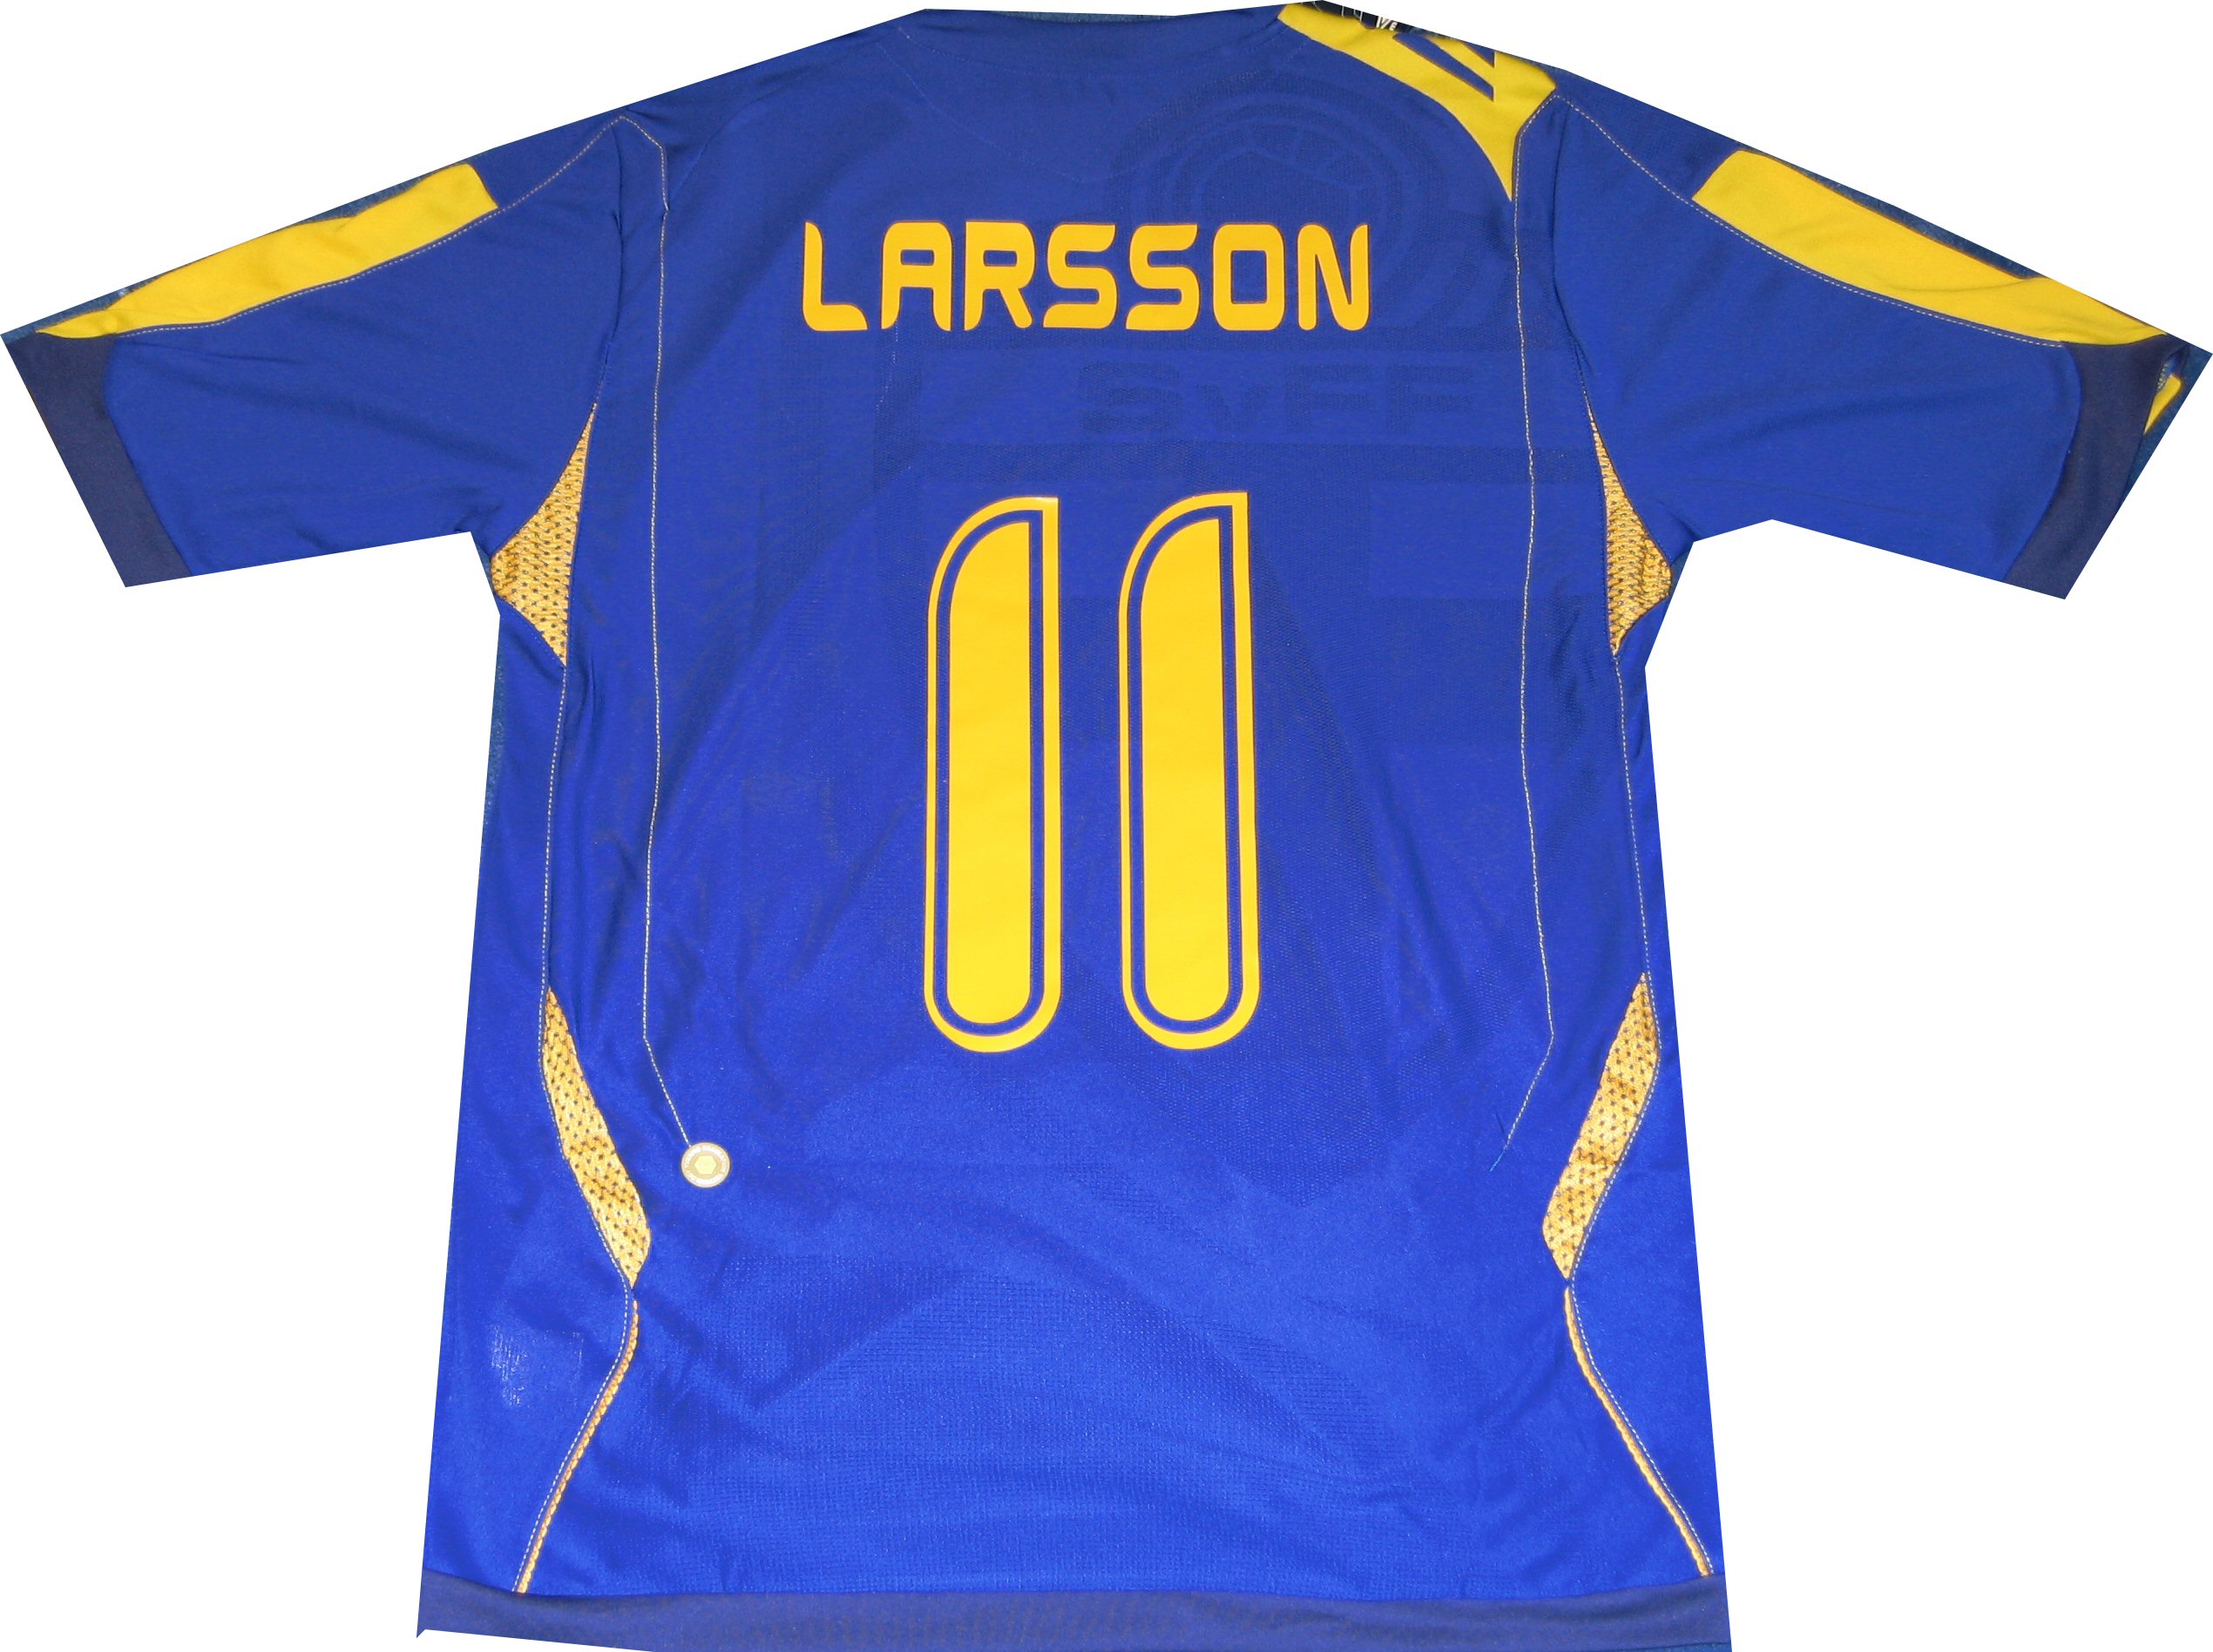 Umbro Sweden away (Larsson 11) 06/07